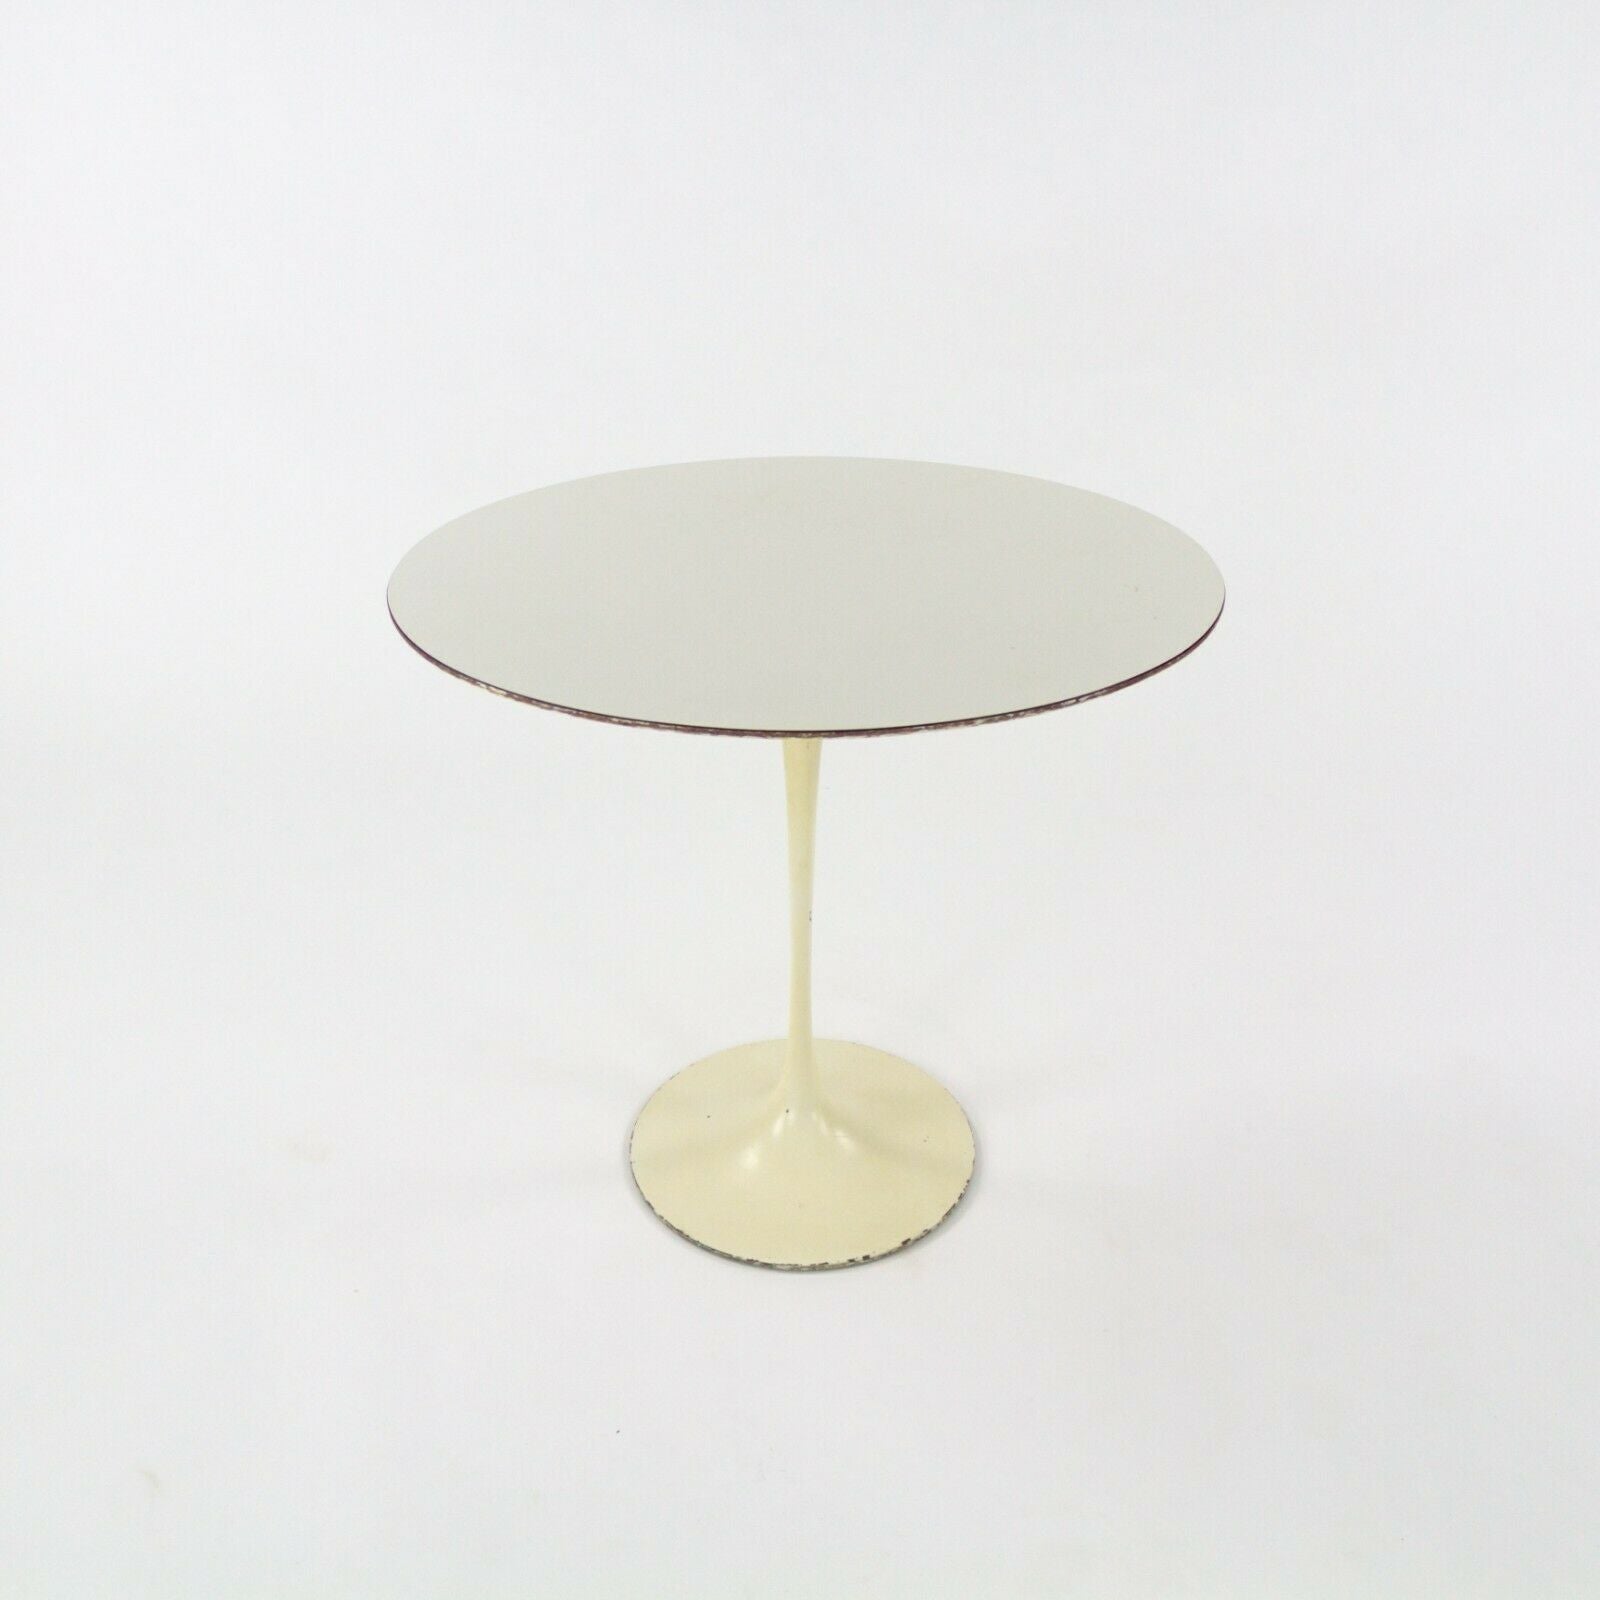 SOLD 1958 Eero Saarinen for Knoll Associates Oval Laminate Side Table 575 Madison Ave